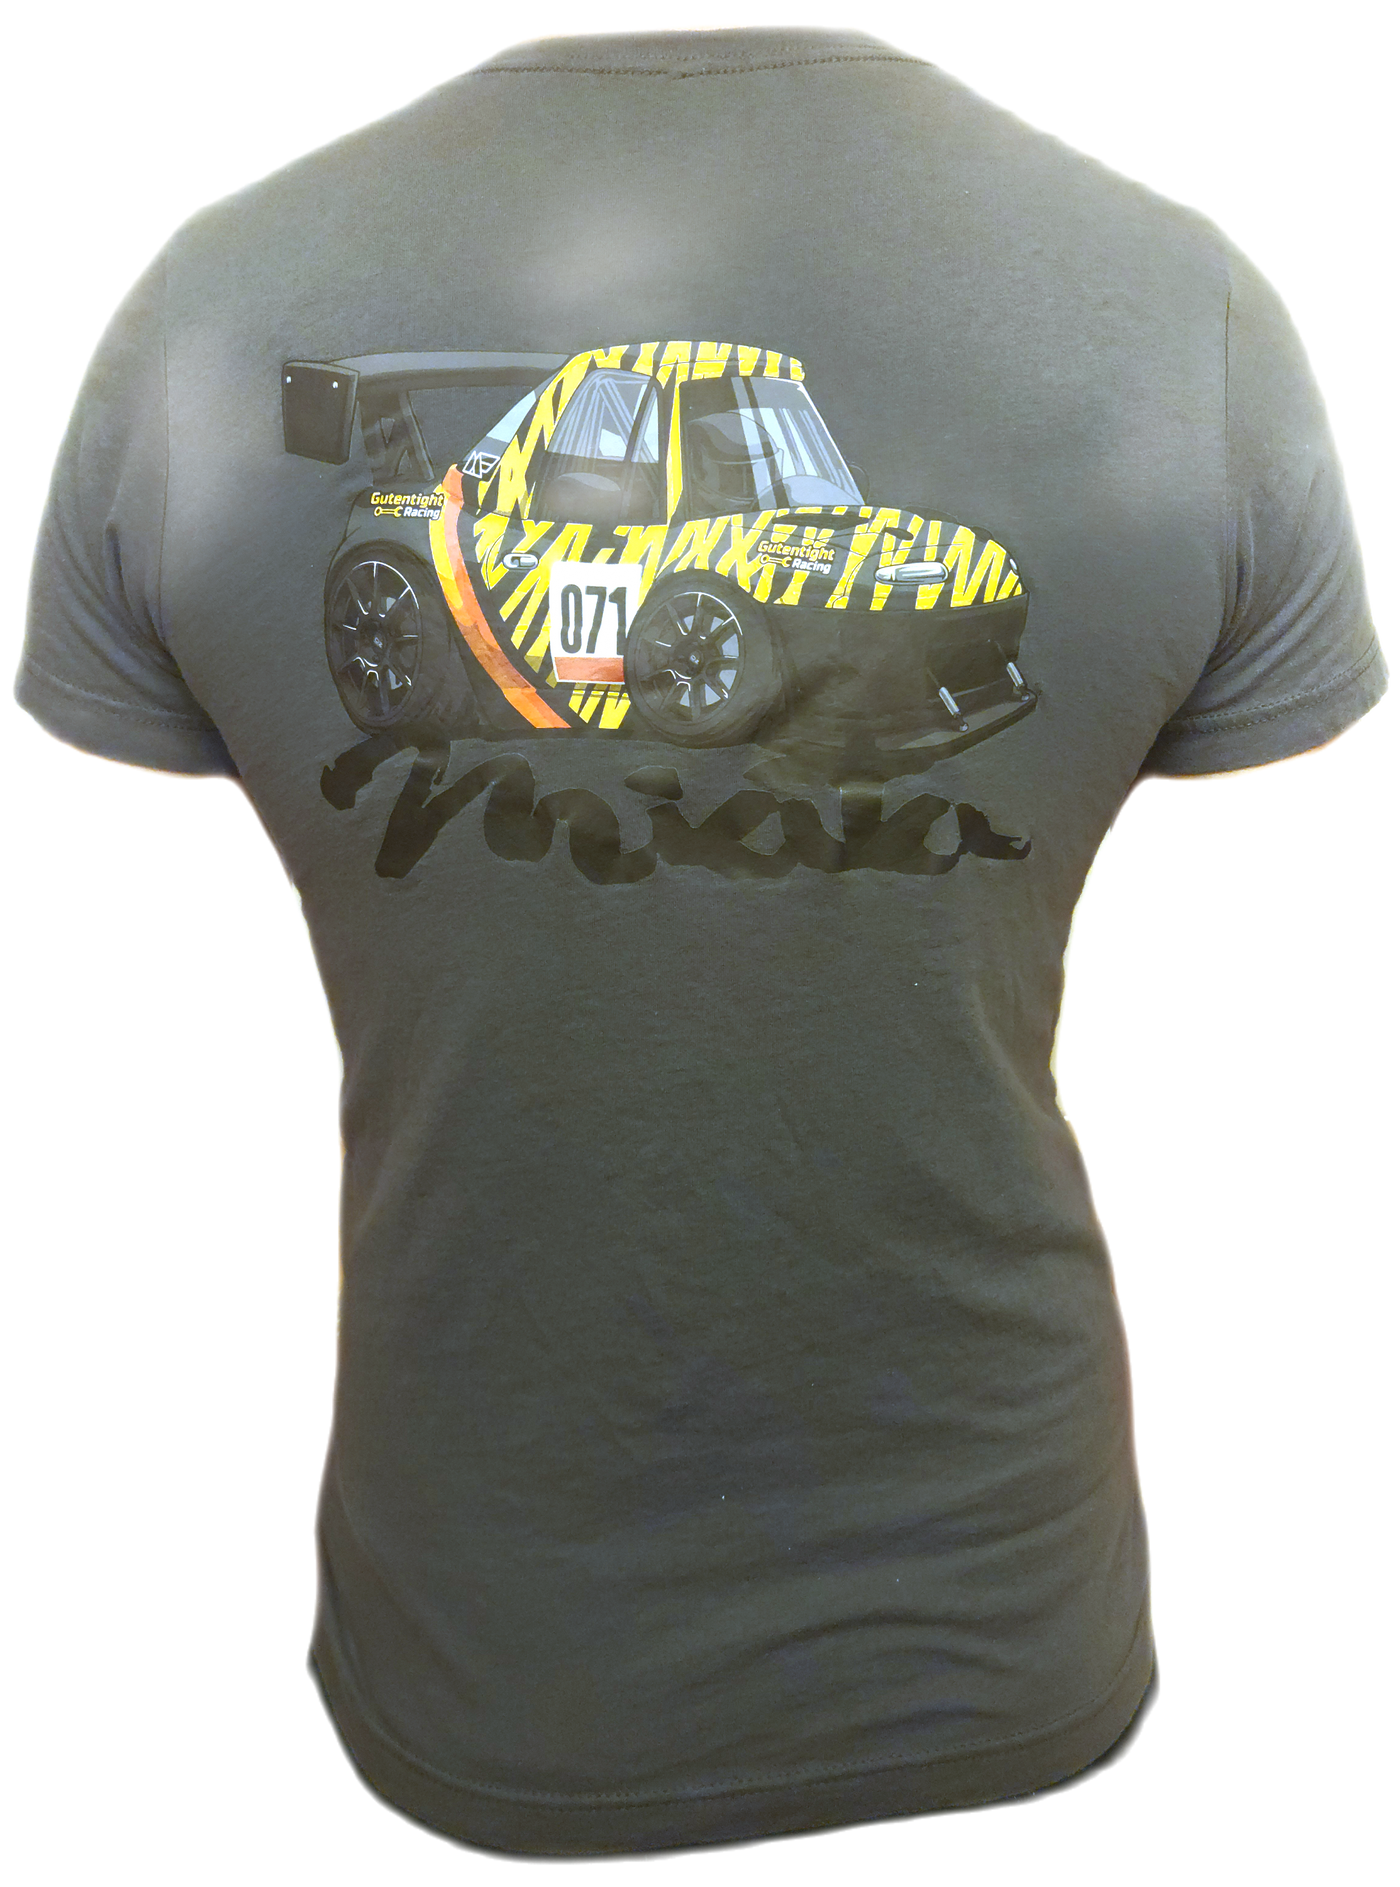 Mangrove Yellow NA Miata #071 Gutentight Racing T Shirt K24 Swapped